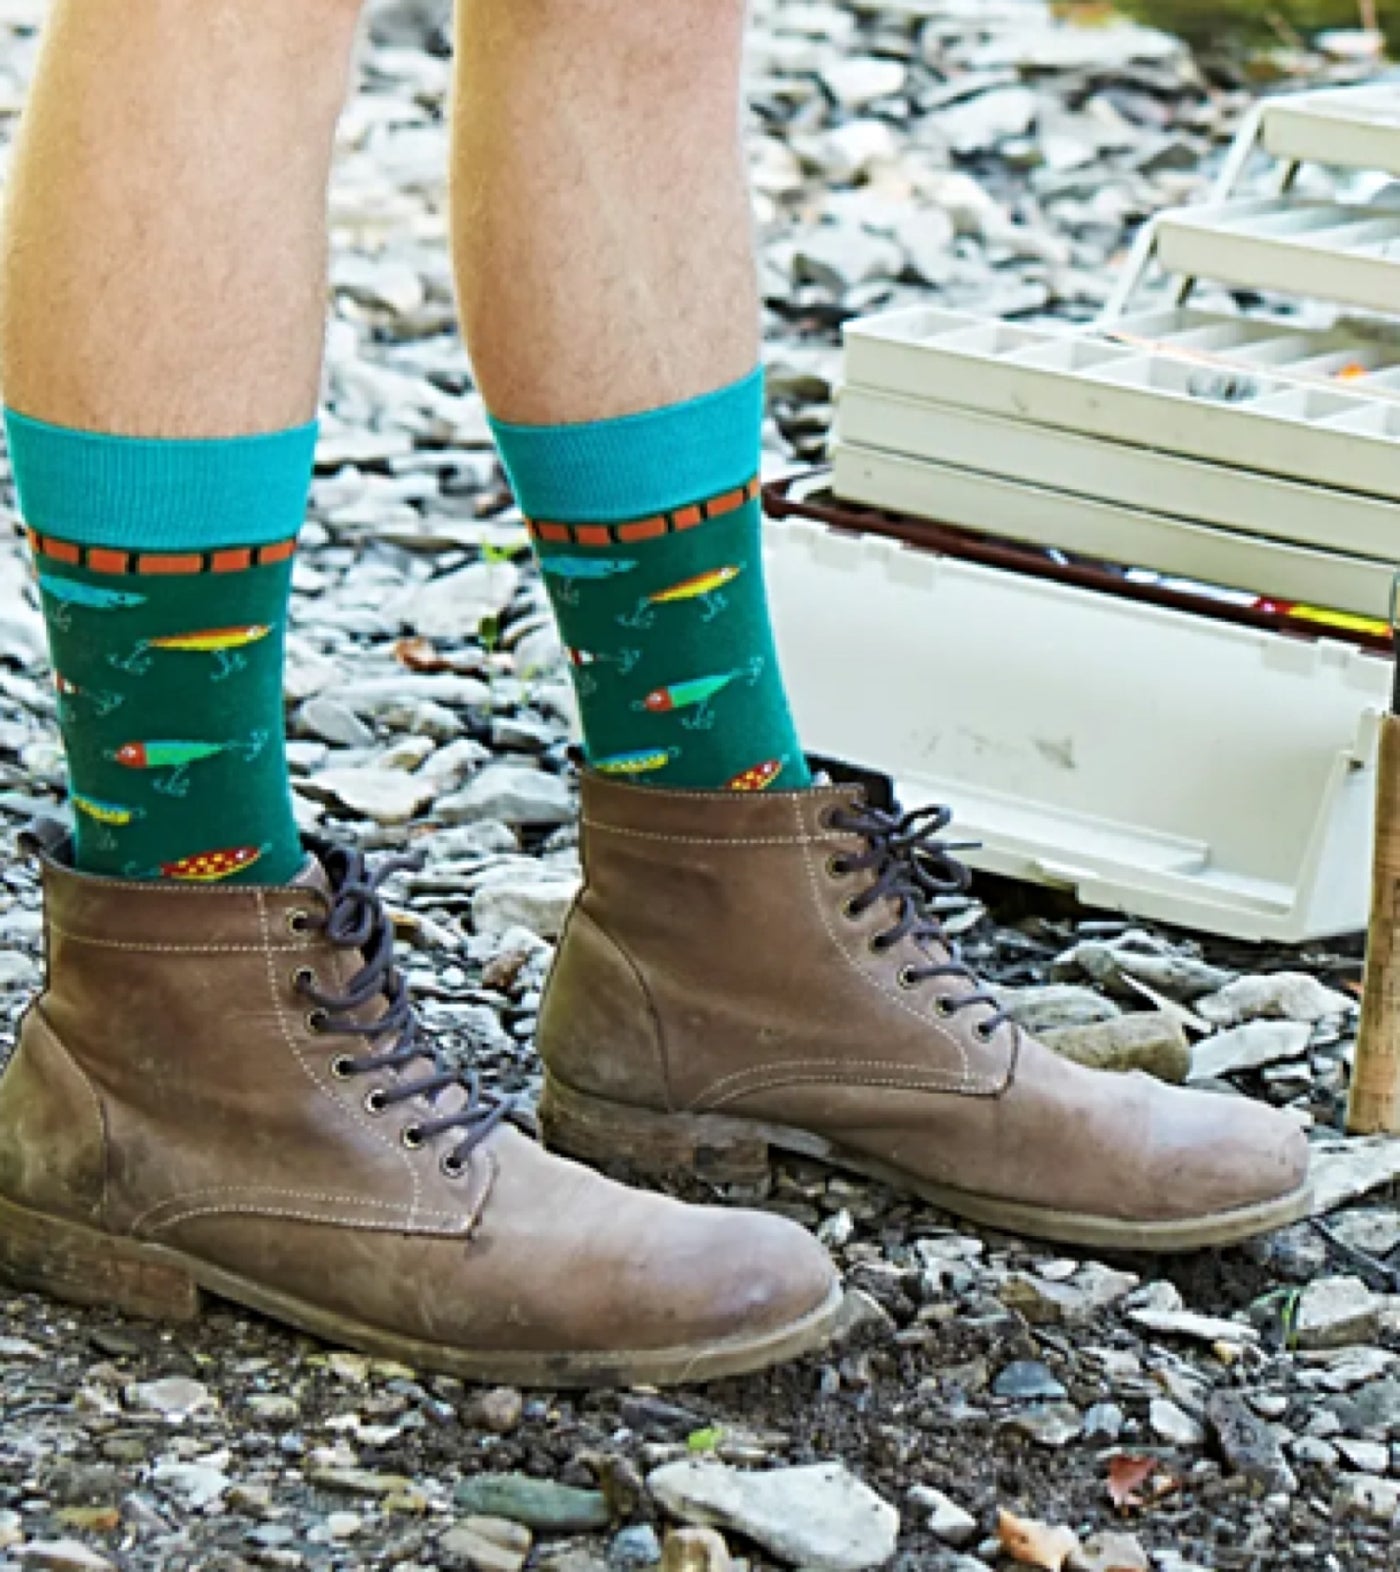 FOOT TRAFFIC Brand Men's BARBER SHOP Socks